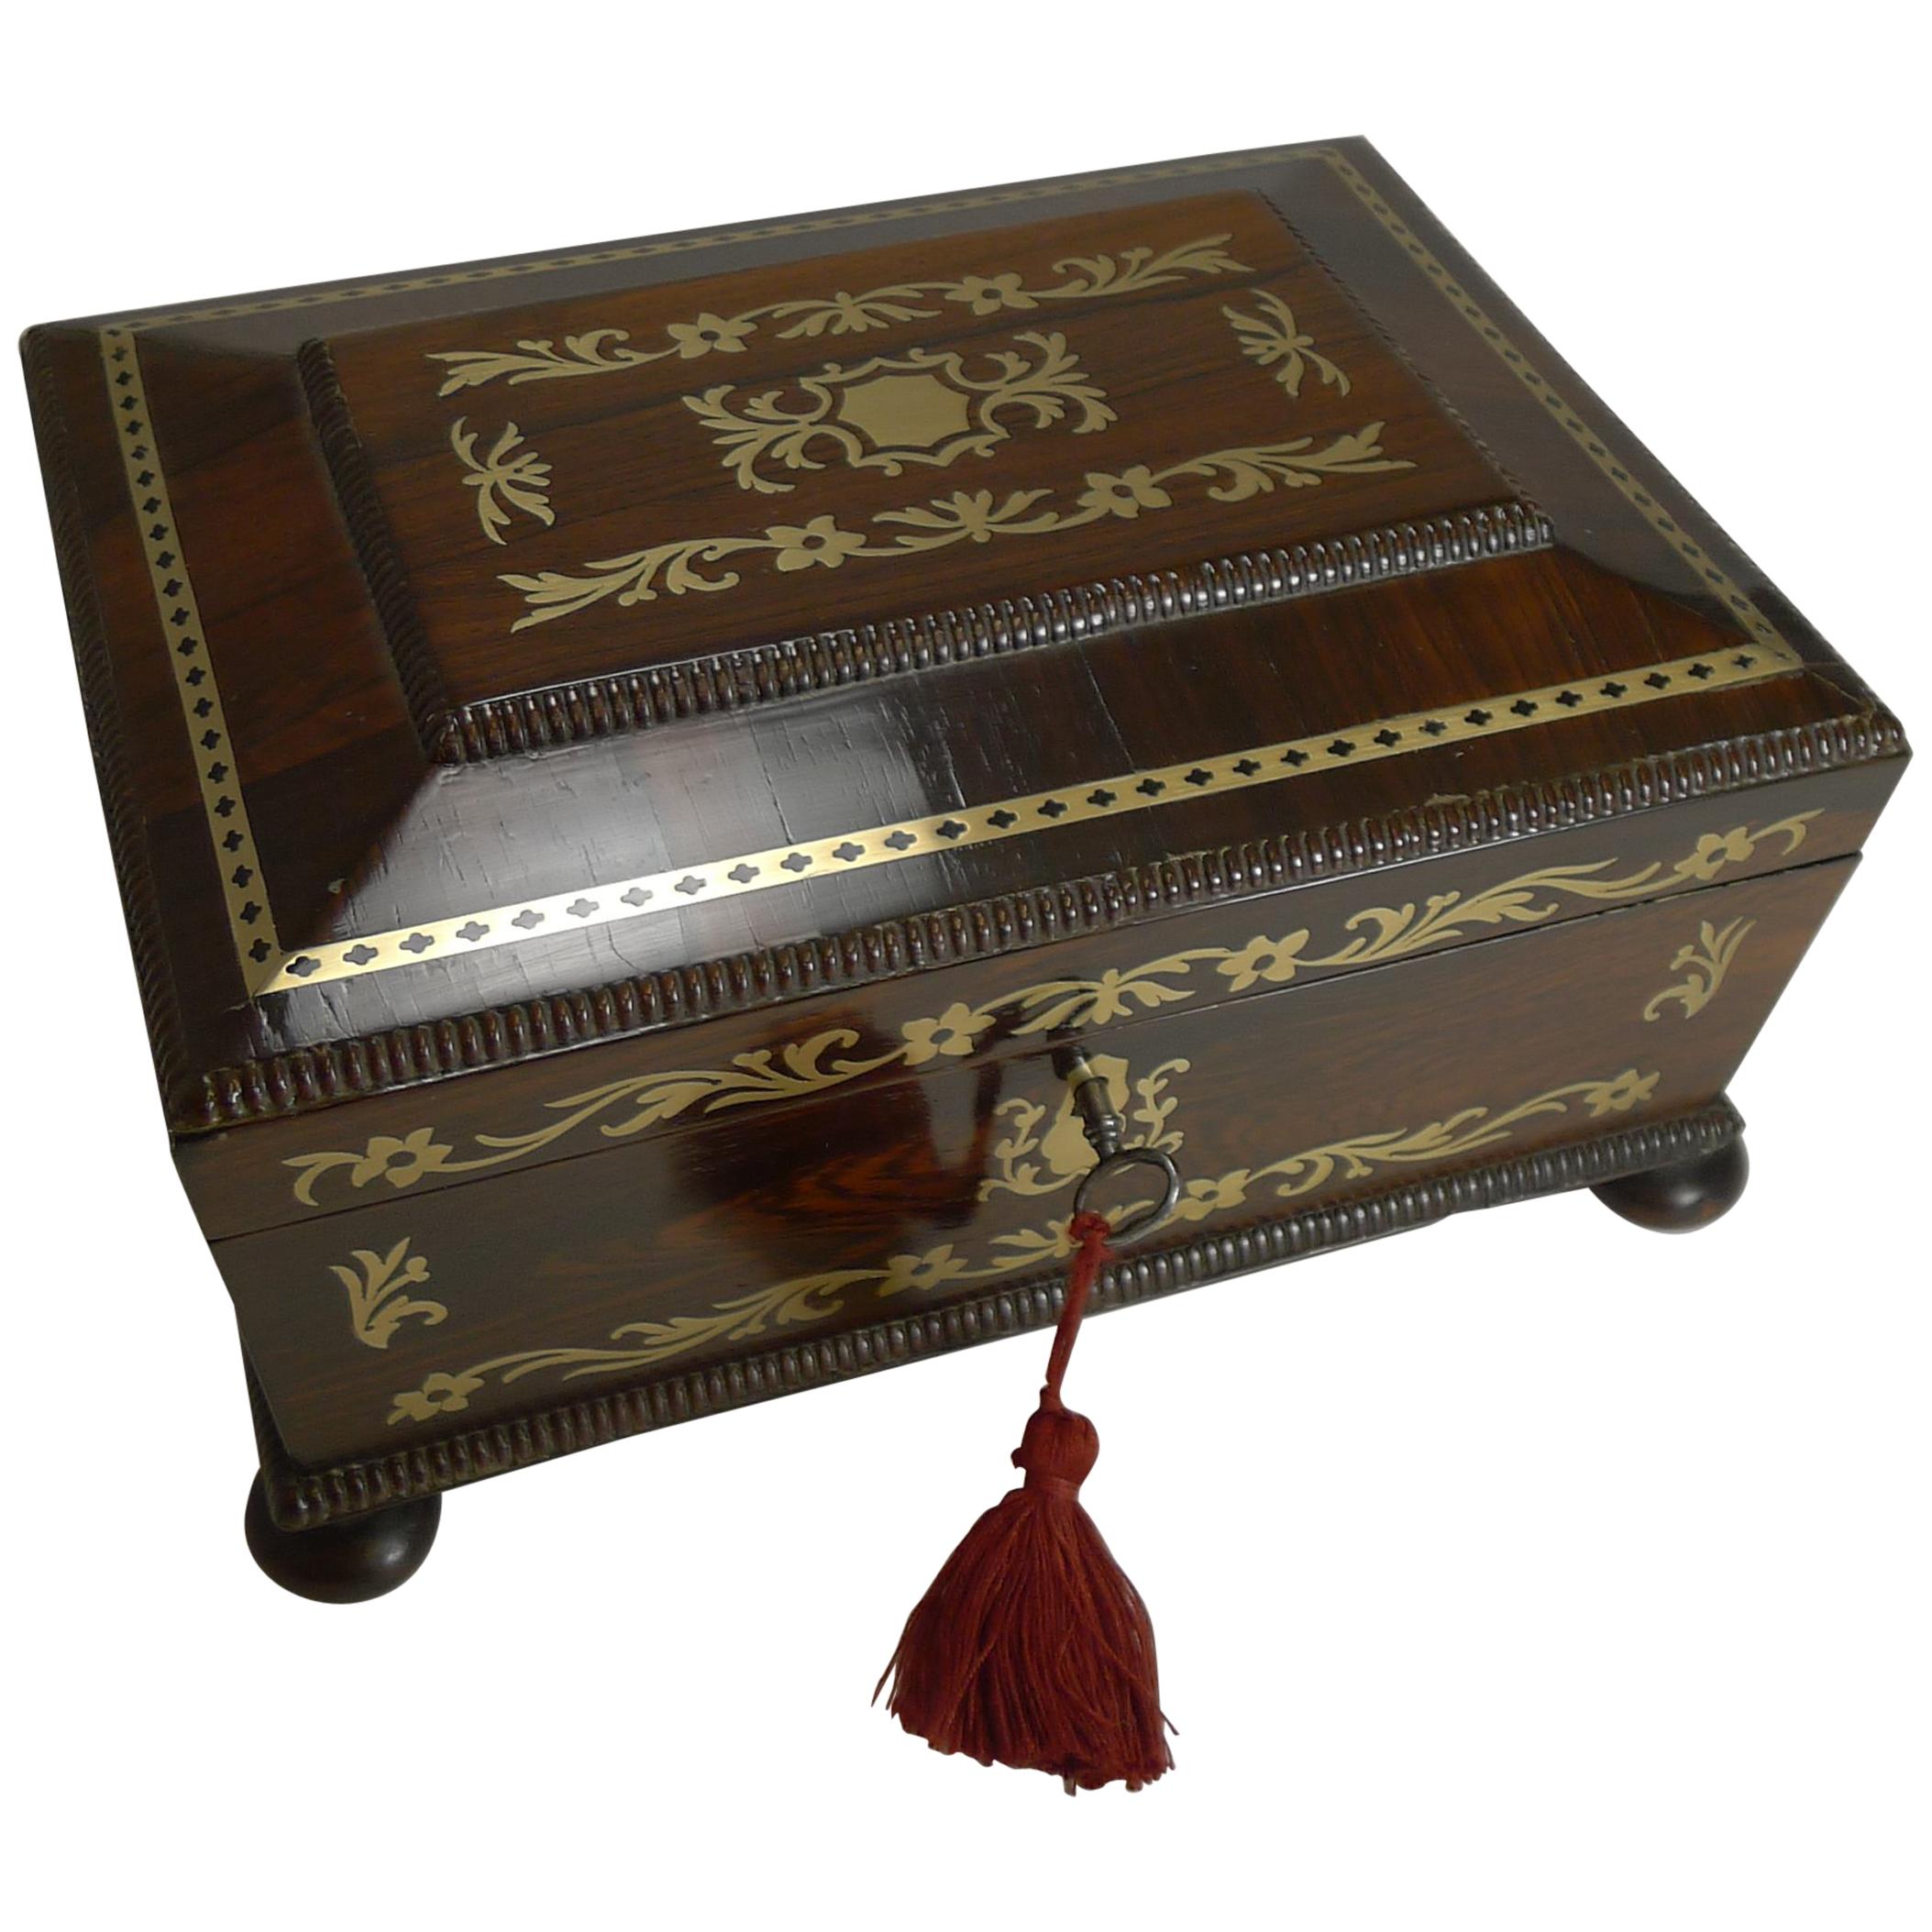 Antique English Cut Brass Inlaid Jewelry / Desk Box, circa 1820